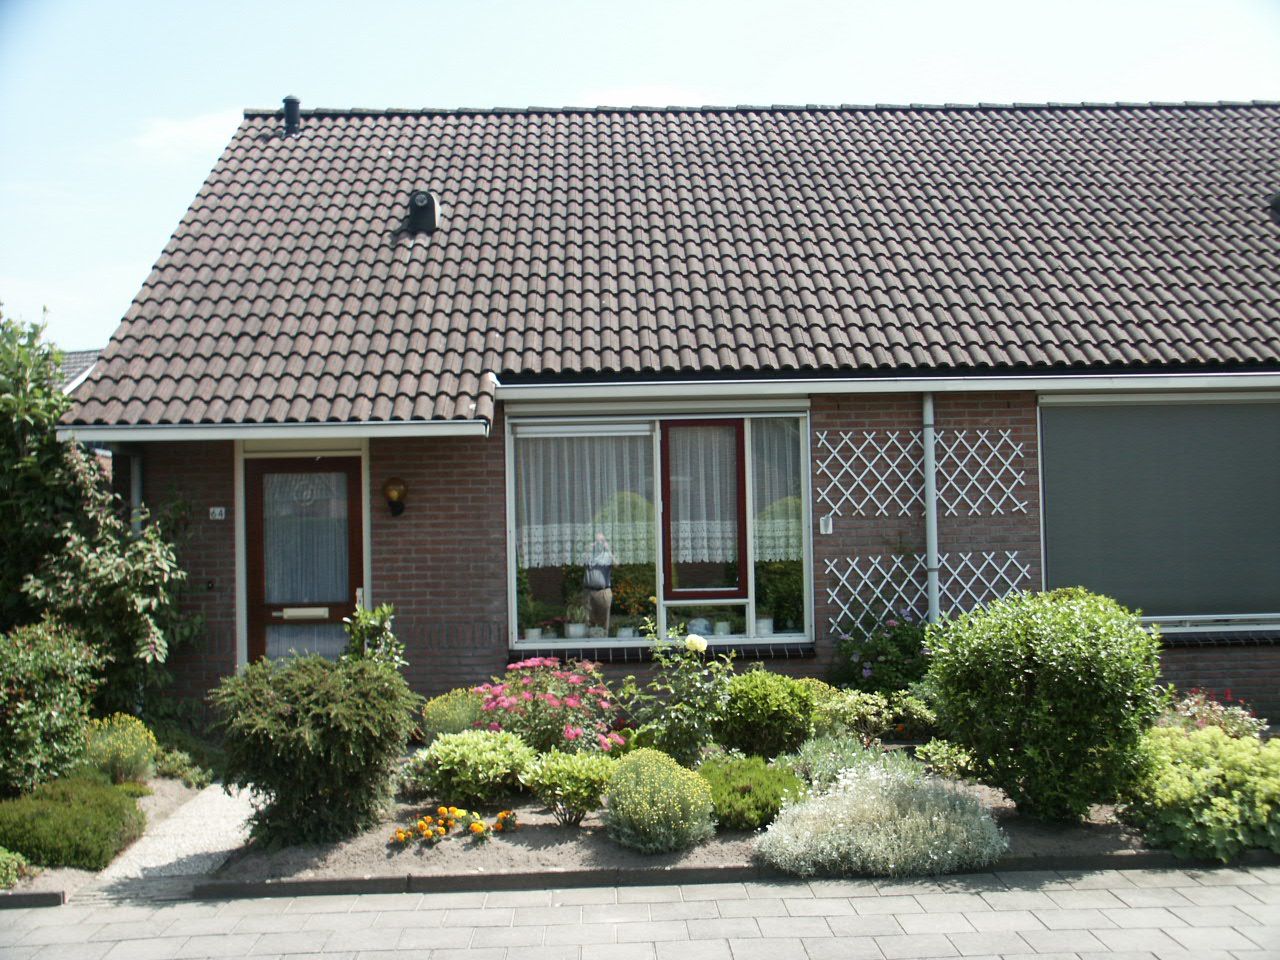 Caeciliënkamp 64, 7161 CV Neede, Nederland